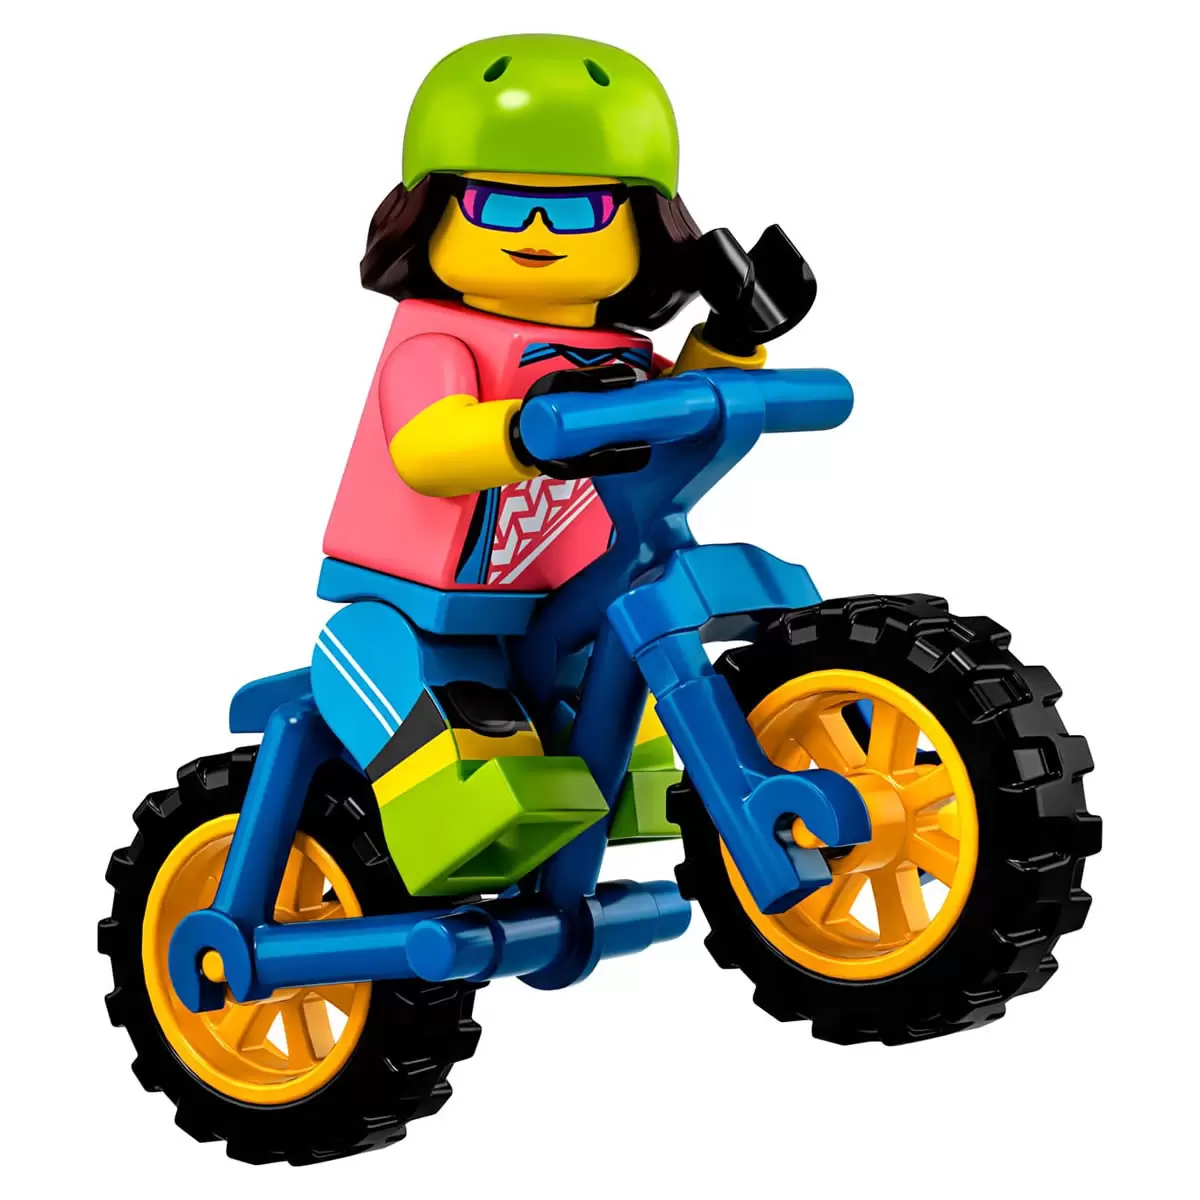 LEGO Minifigures Series 19 - Mountain Biker